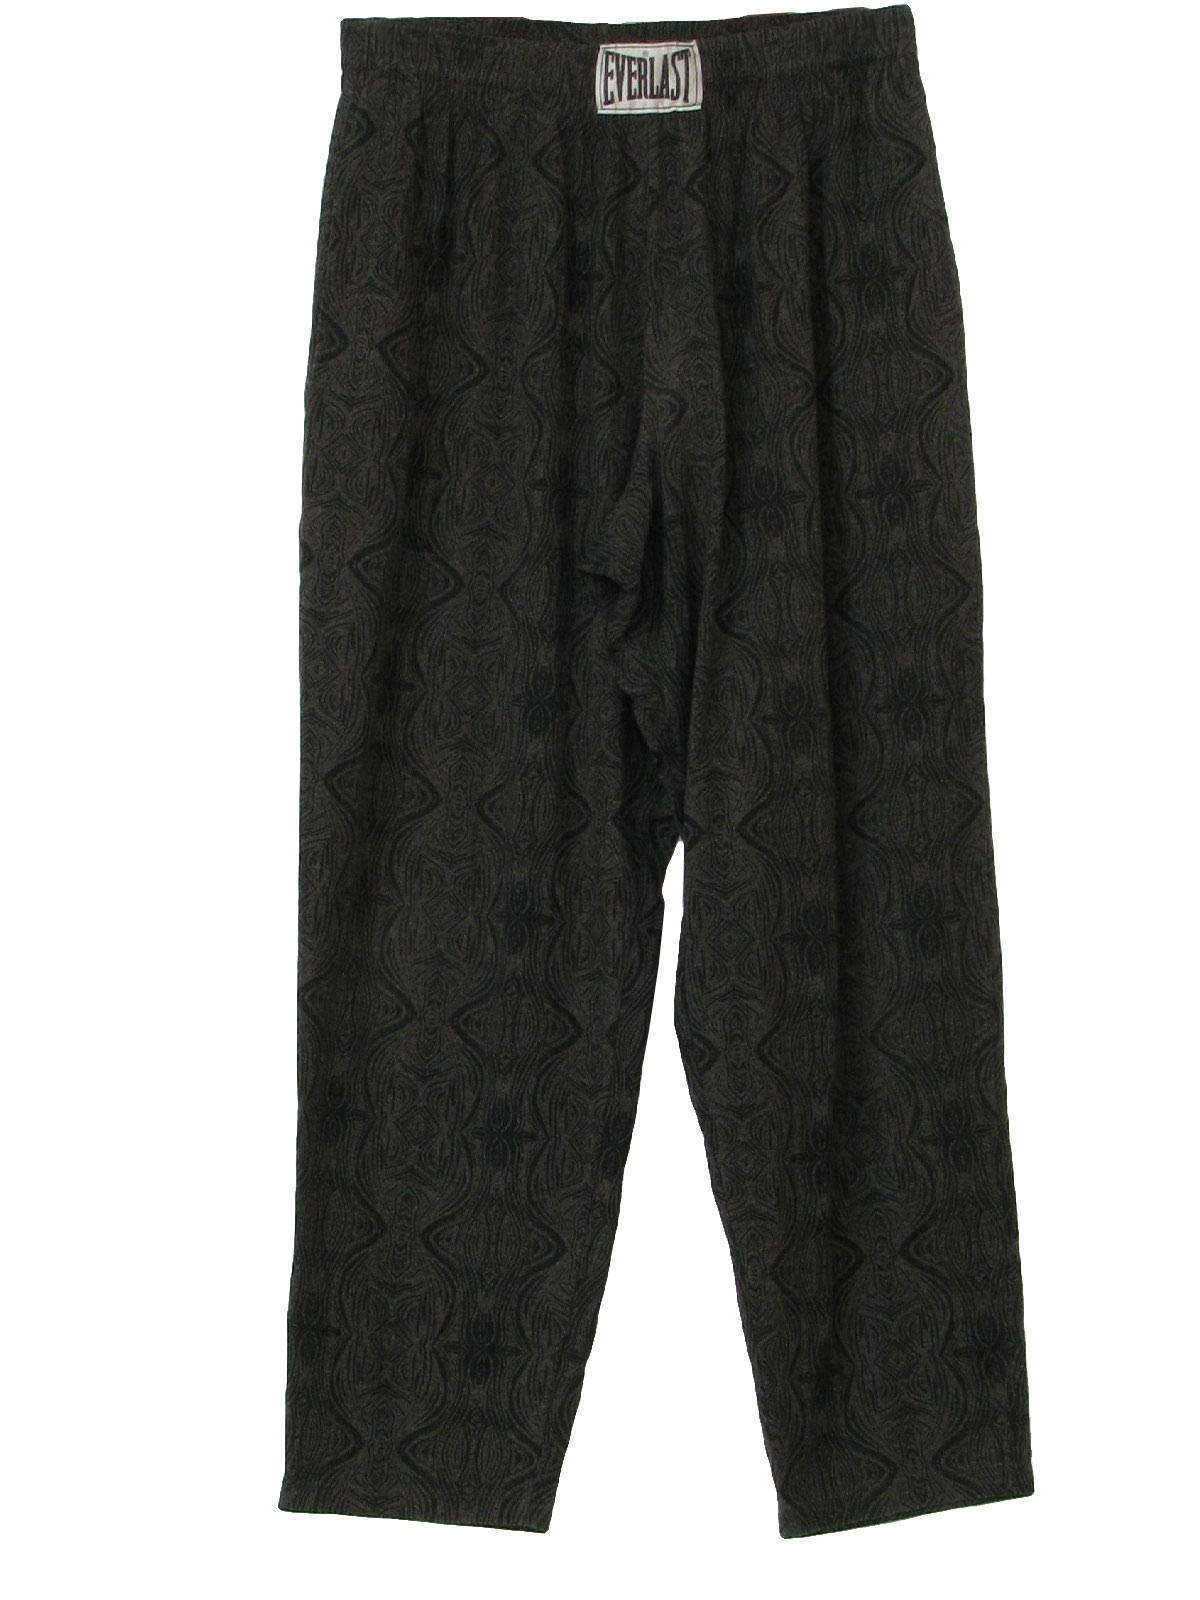 Vintage Everlast Eighties Pants: 80s -Everlast- Mens black and grey ...